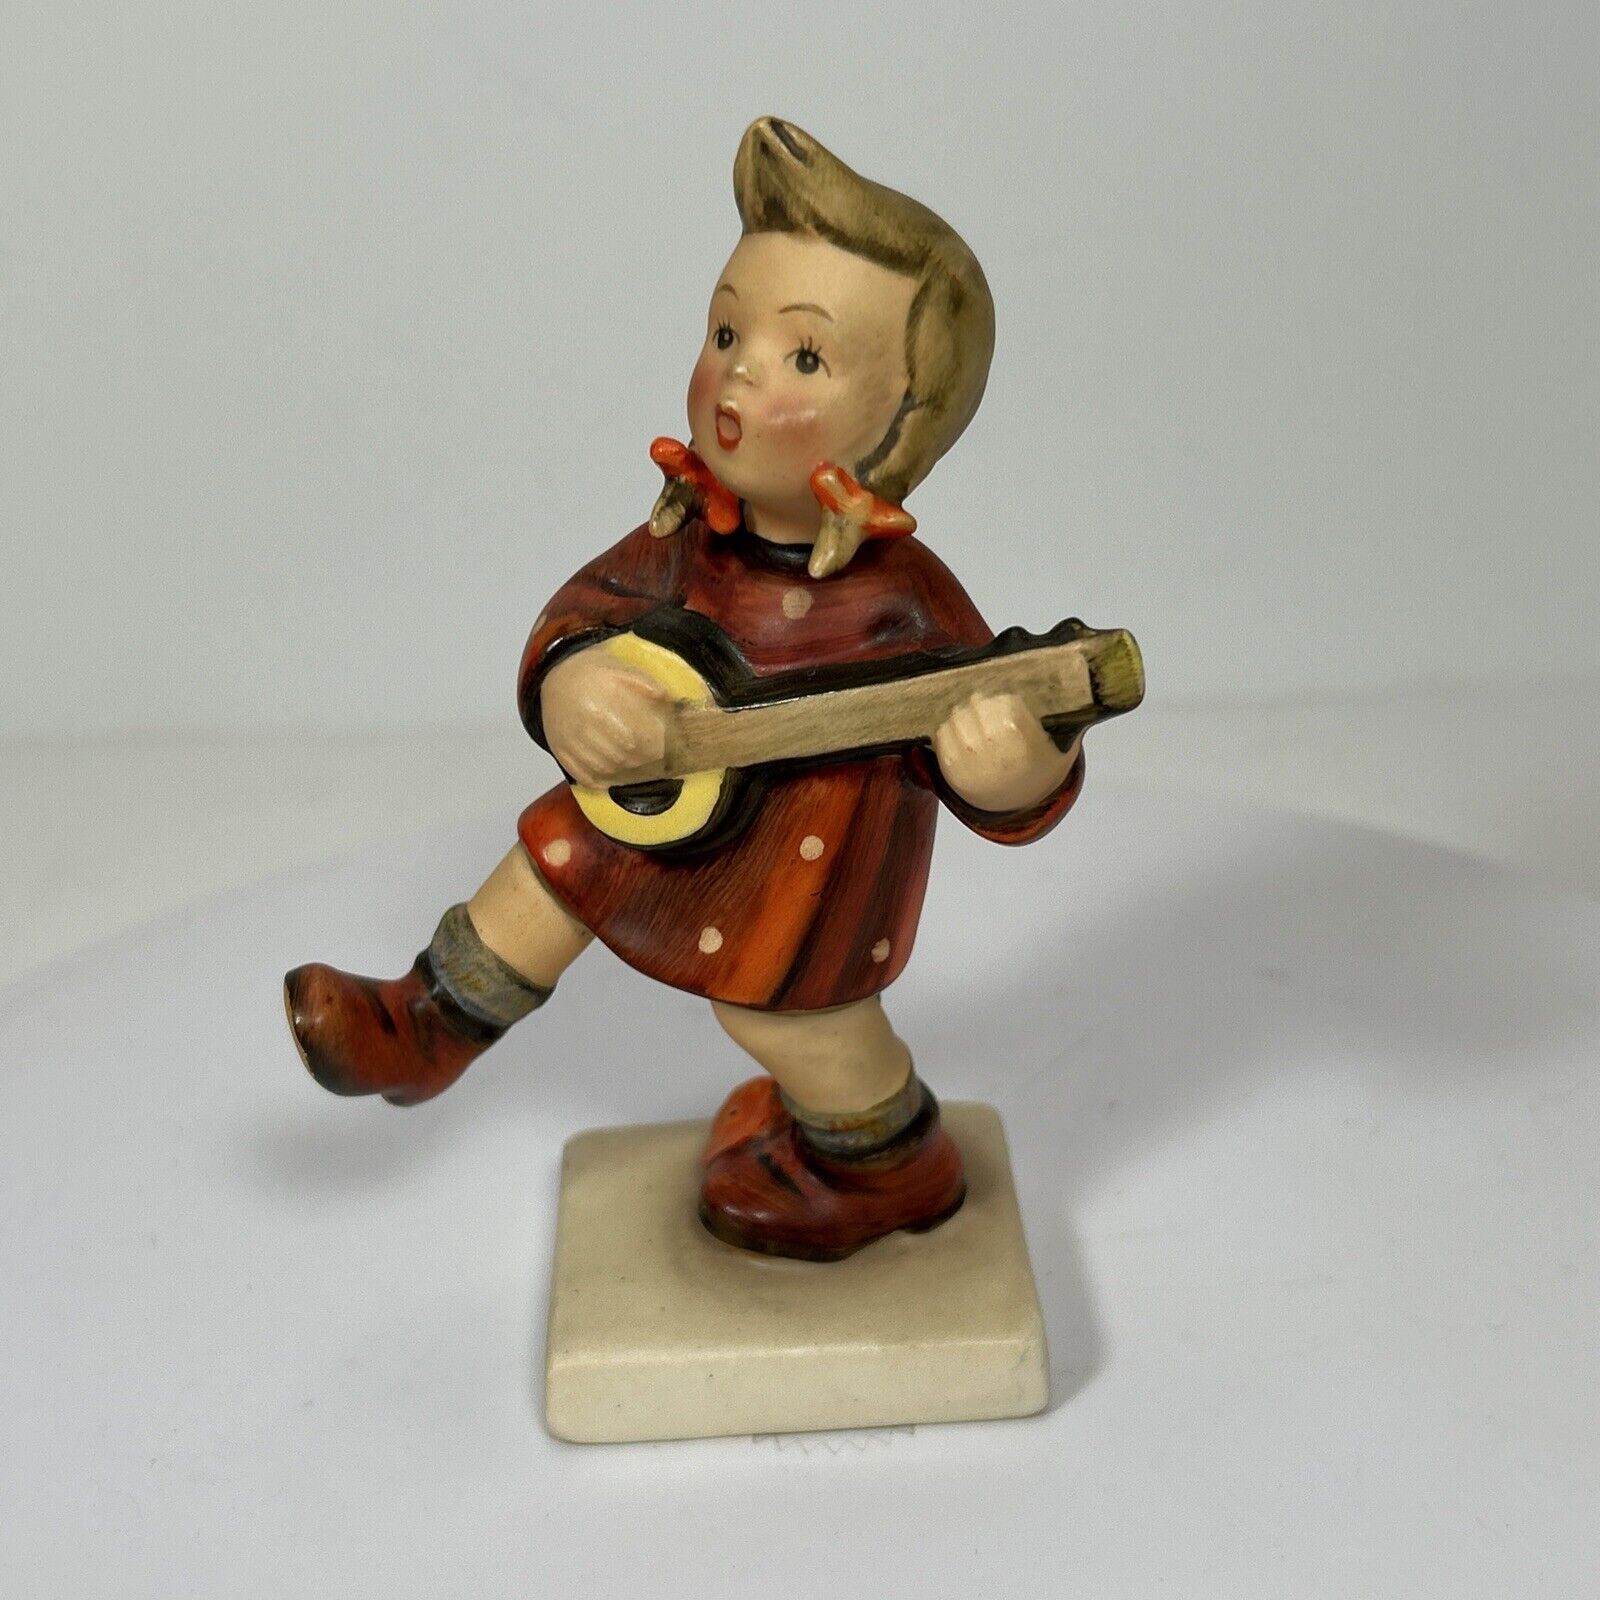 Vintage Hummel Figurine “Happiness” Girl with Banjo # 86 1950 -1955 era